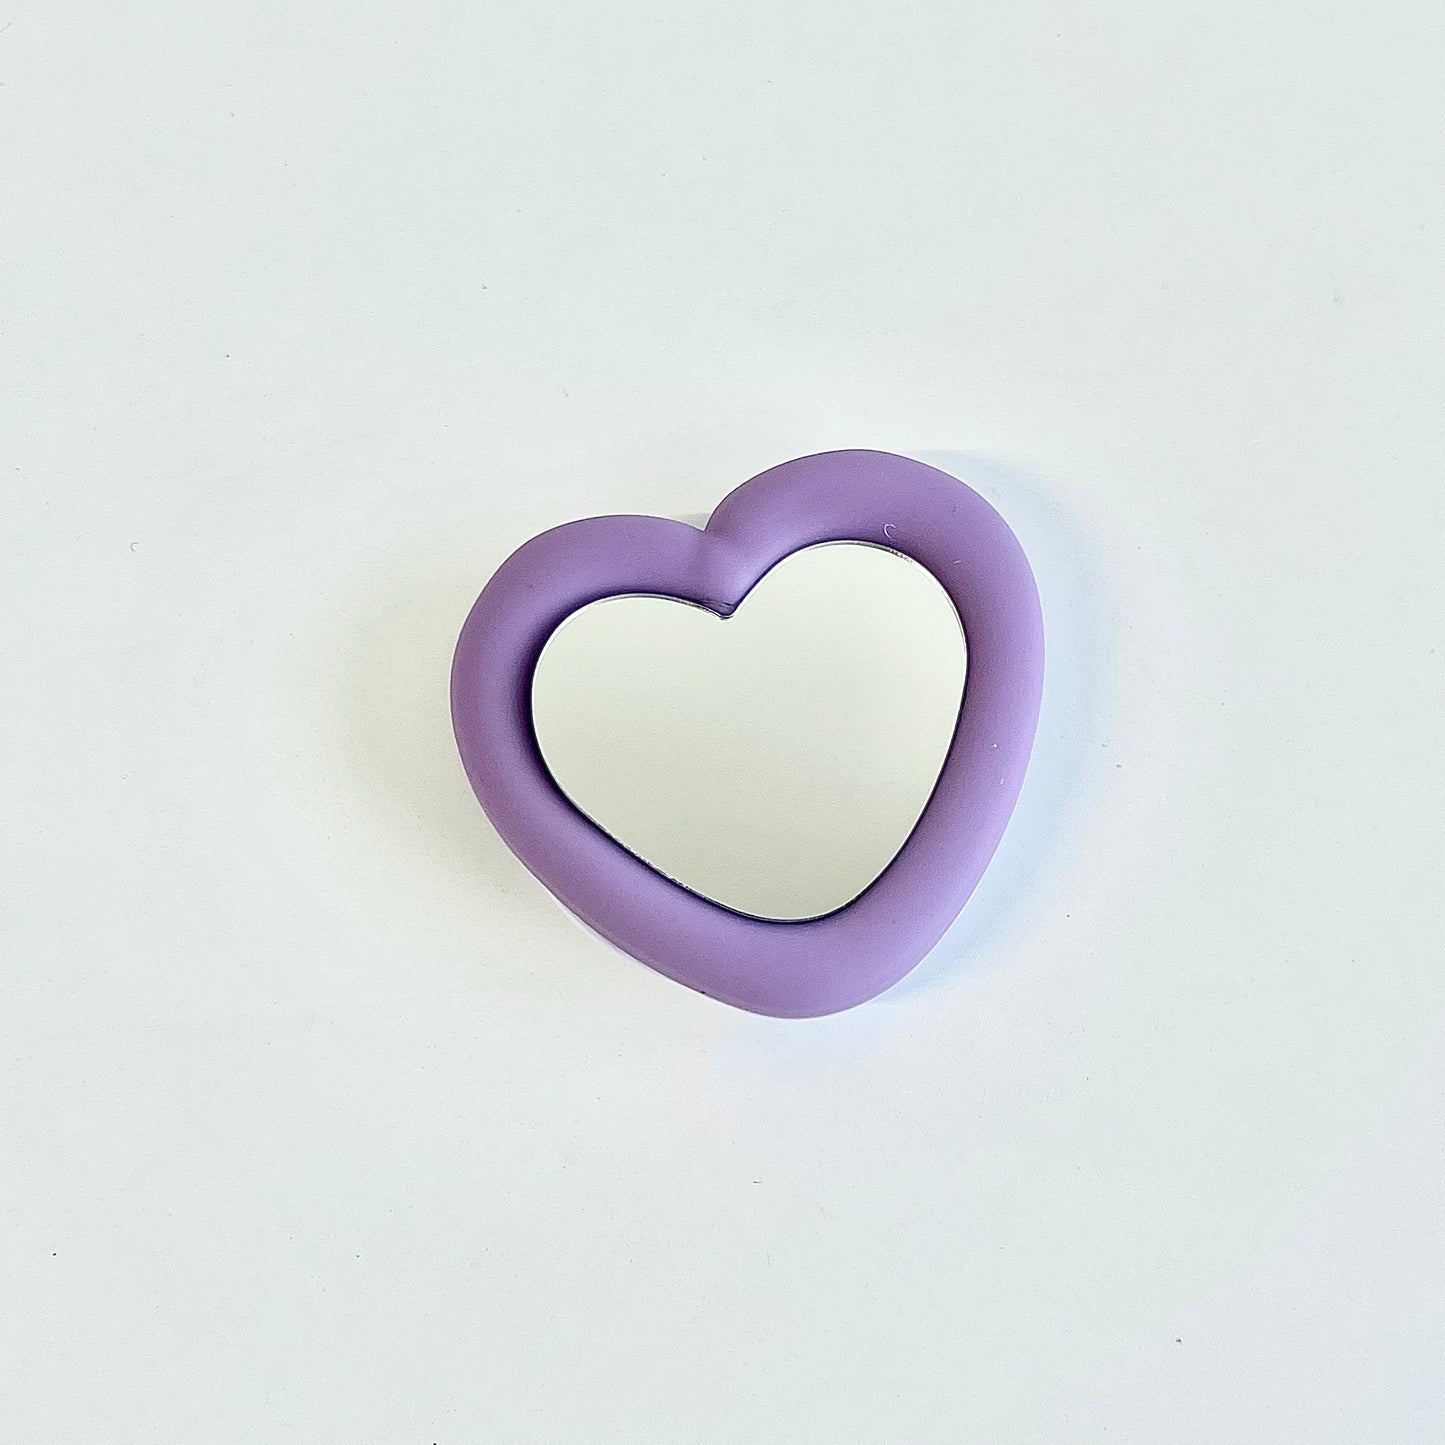 Mini mirror grip #purple heart